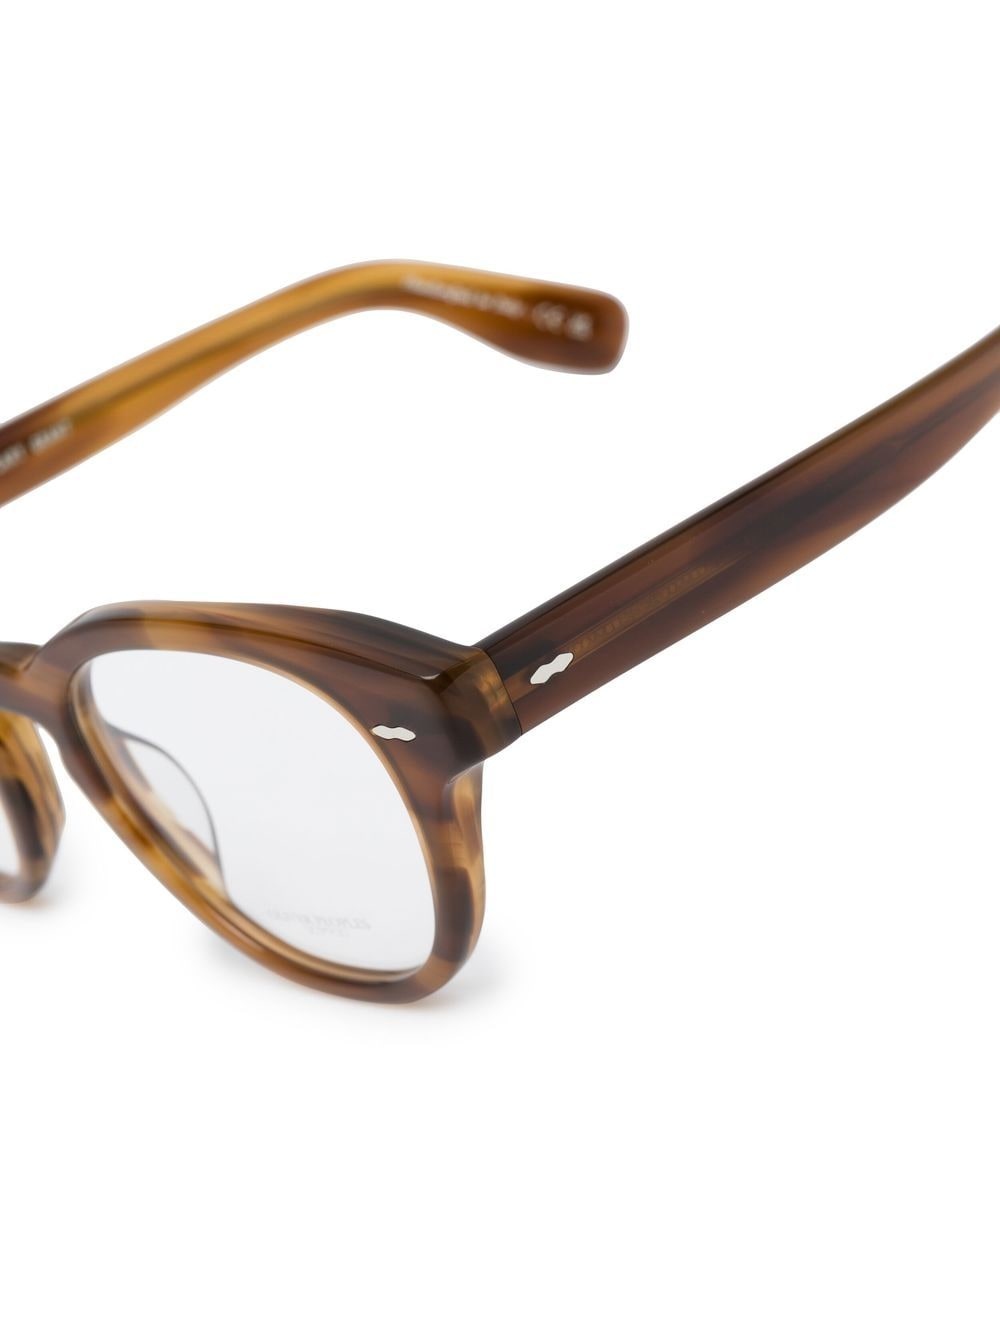 Cary Grant round-frame glasses - 3